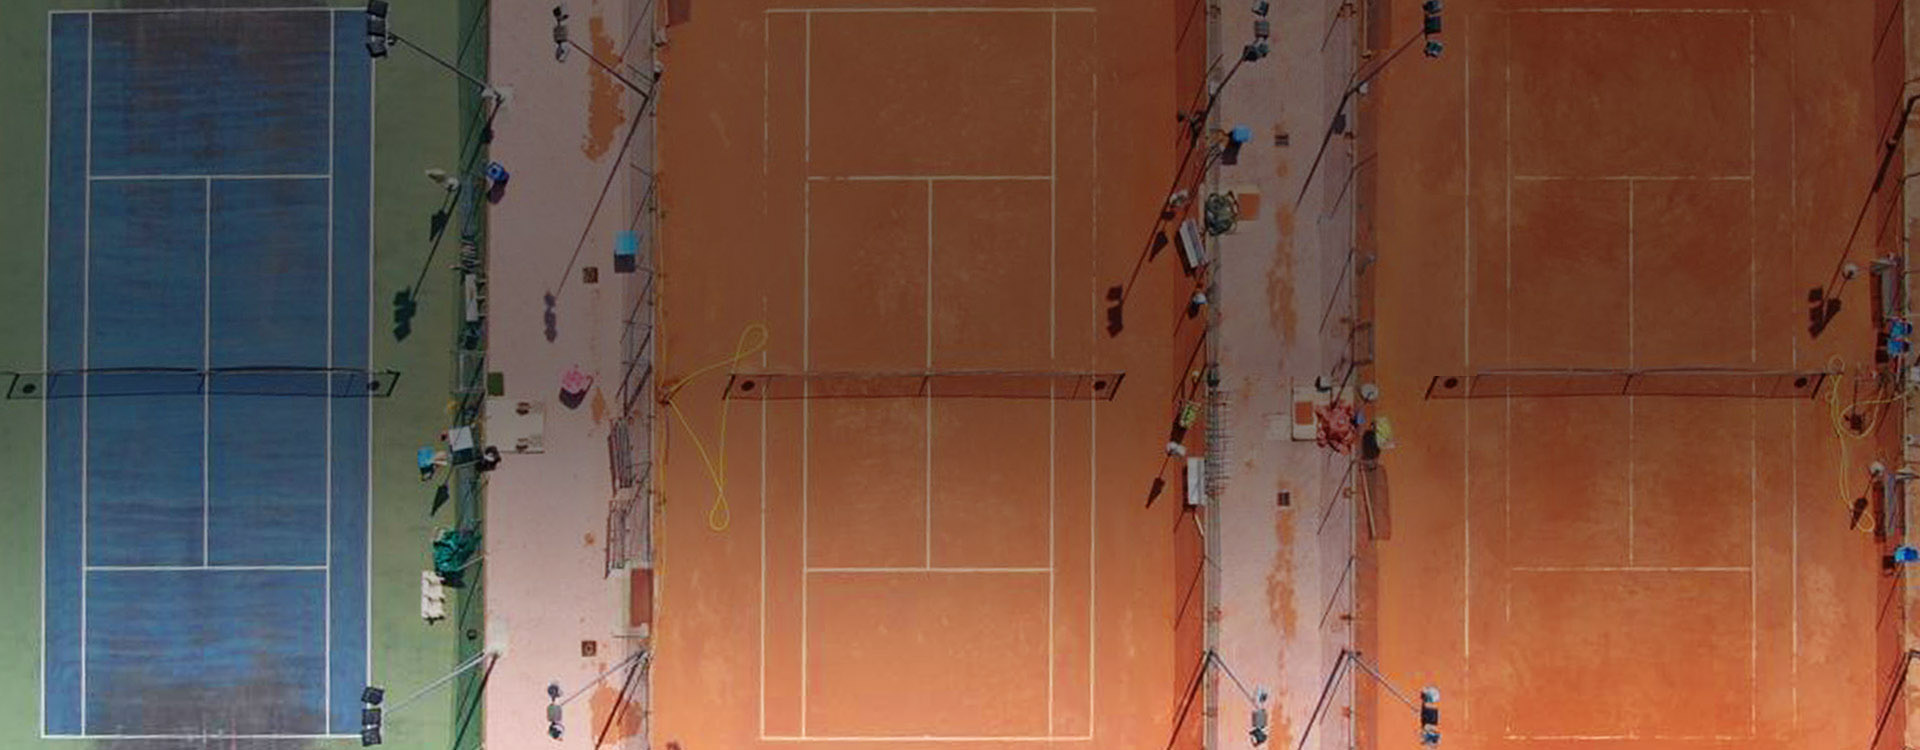 tennis club valmarecchia viasta drone